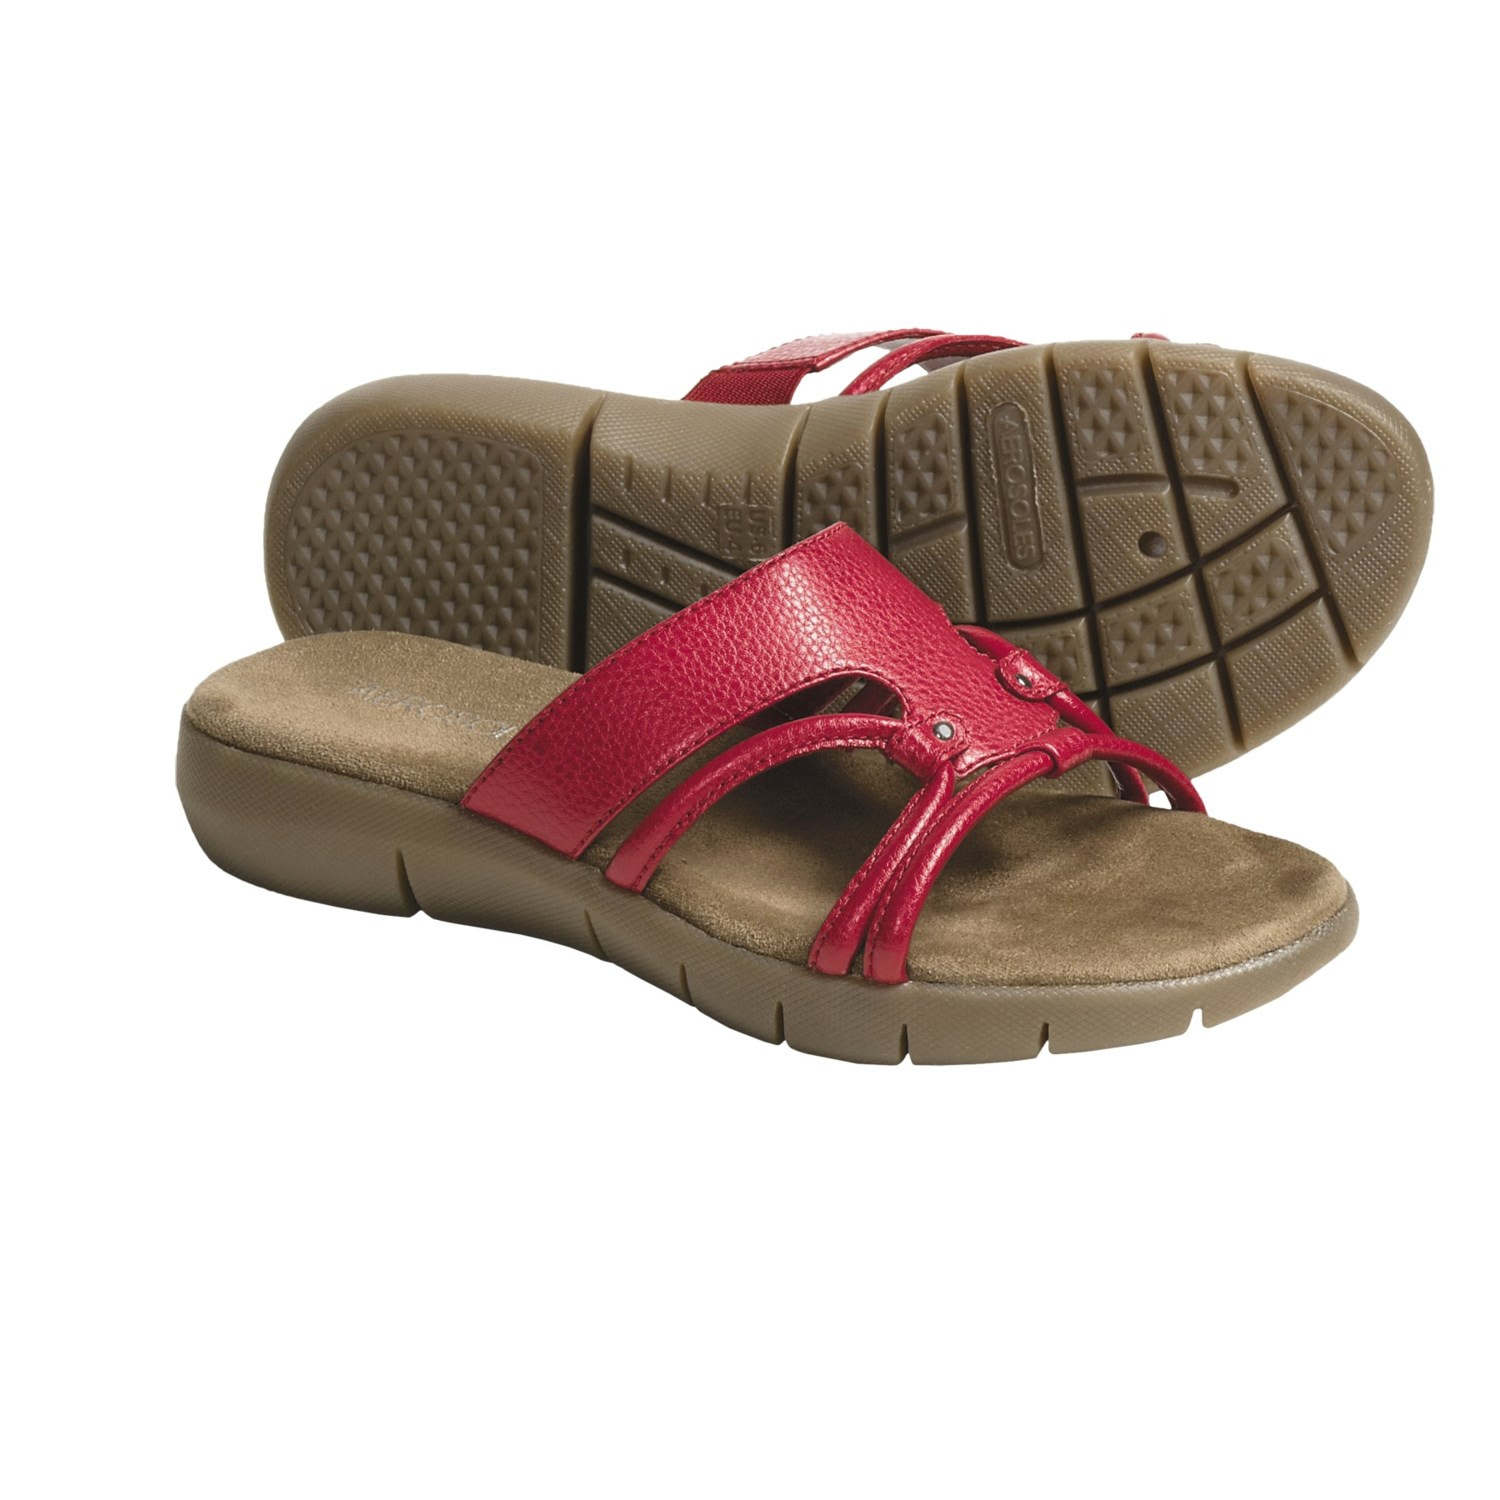 Aerosole Sandals: Aerosole Slide Sandals